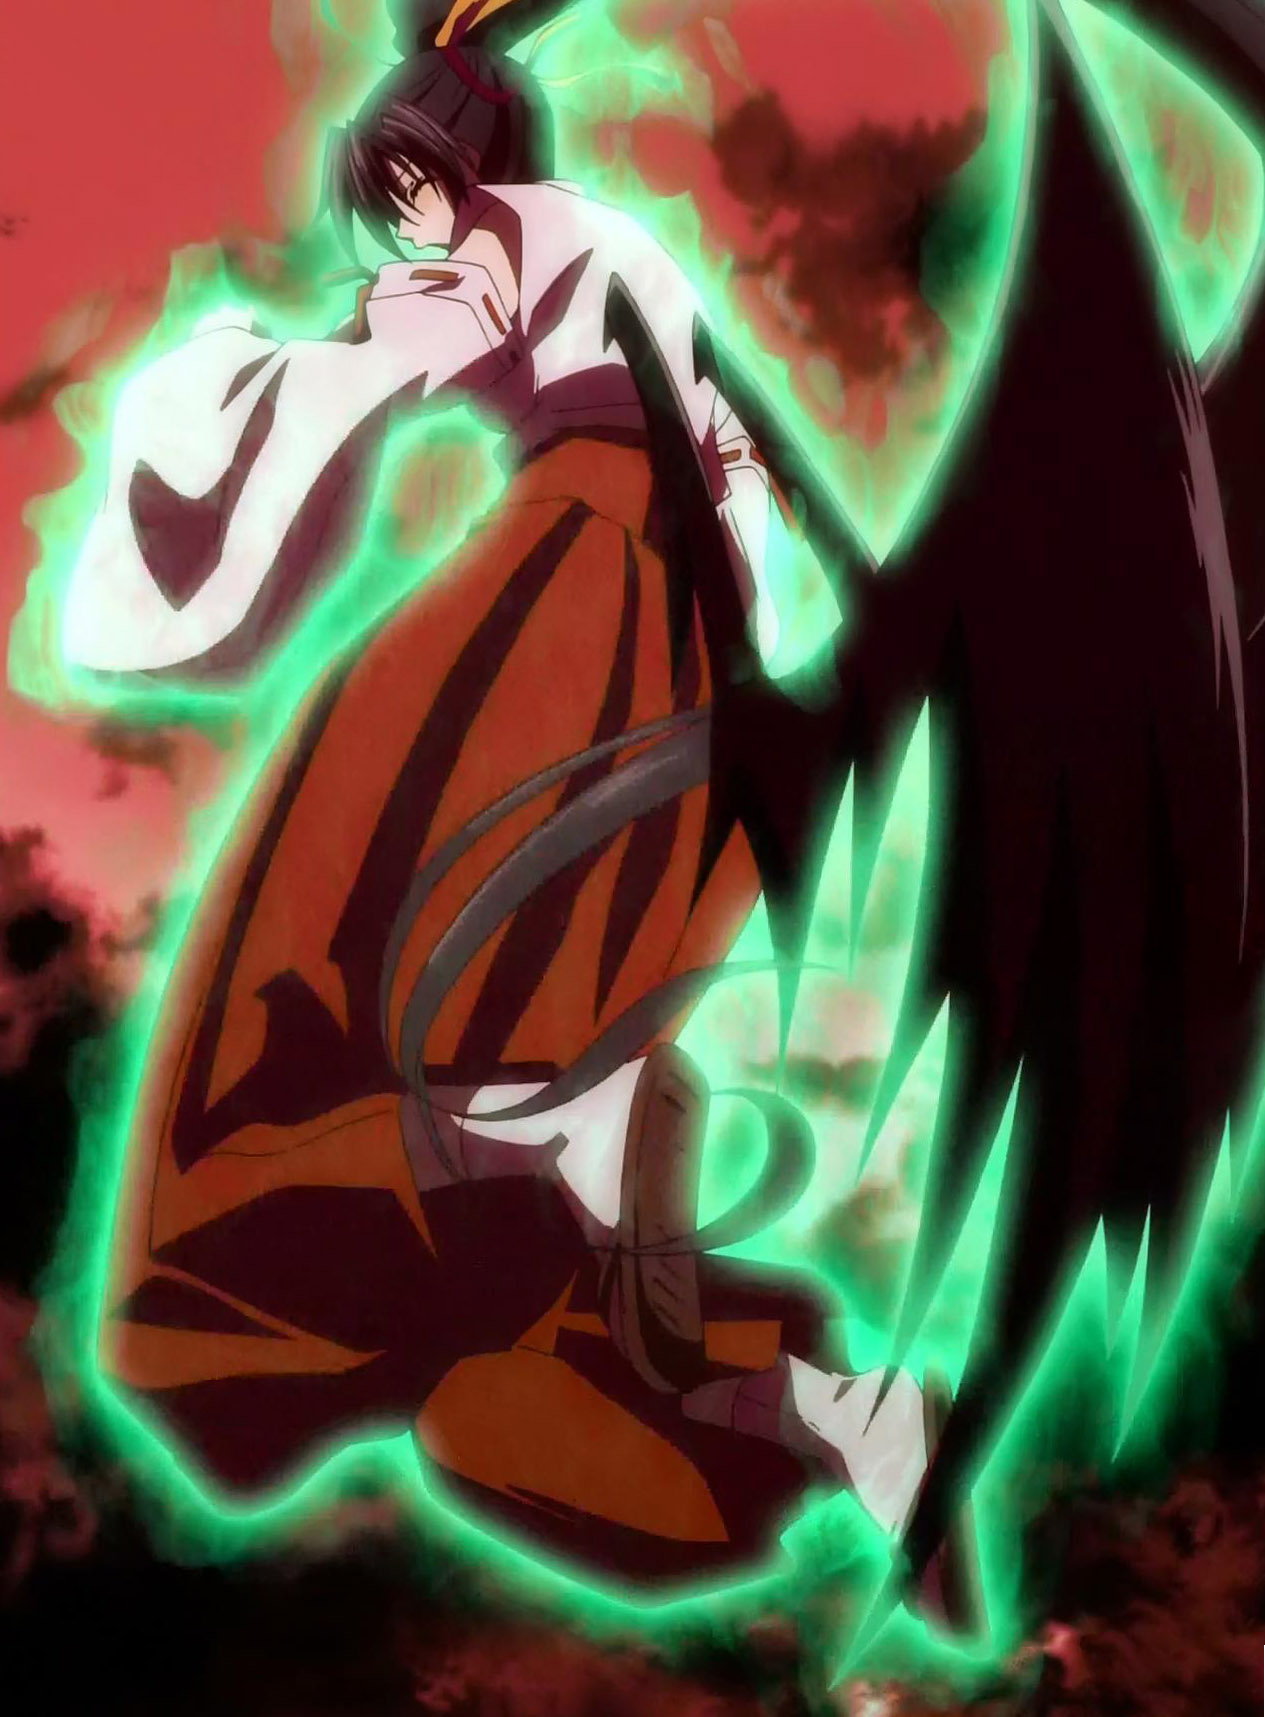 high school dxd - How Akeno has both devil wings? - Anime & Manga Stack  Exchange